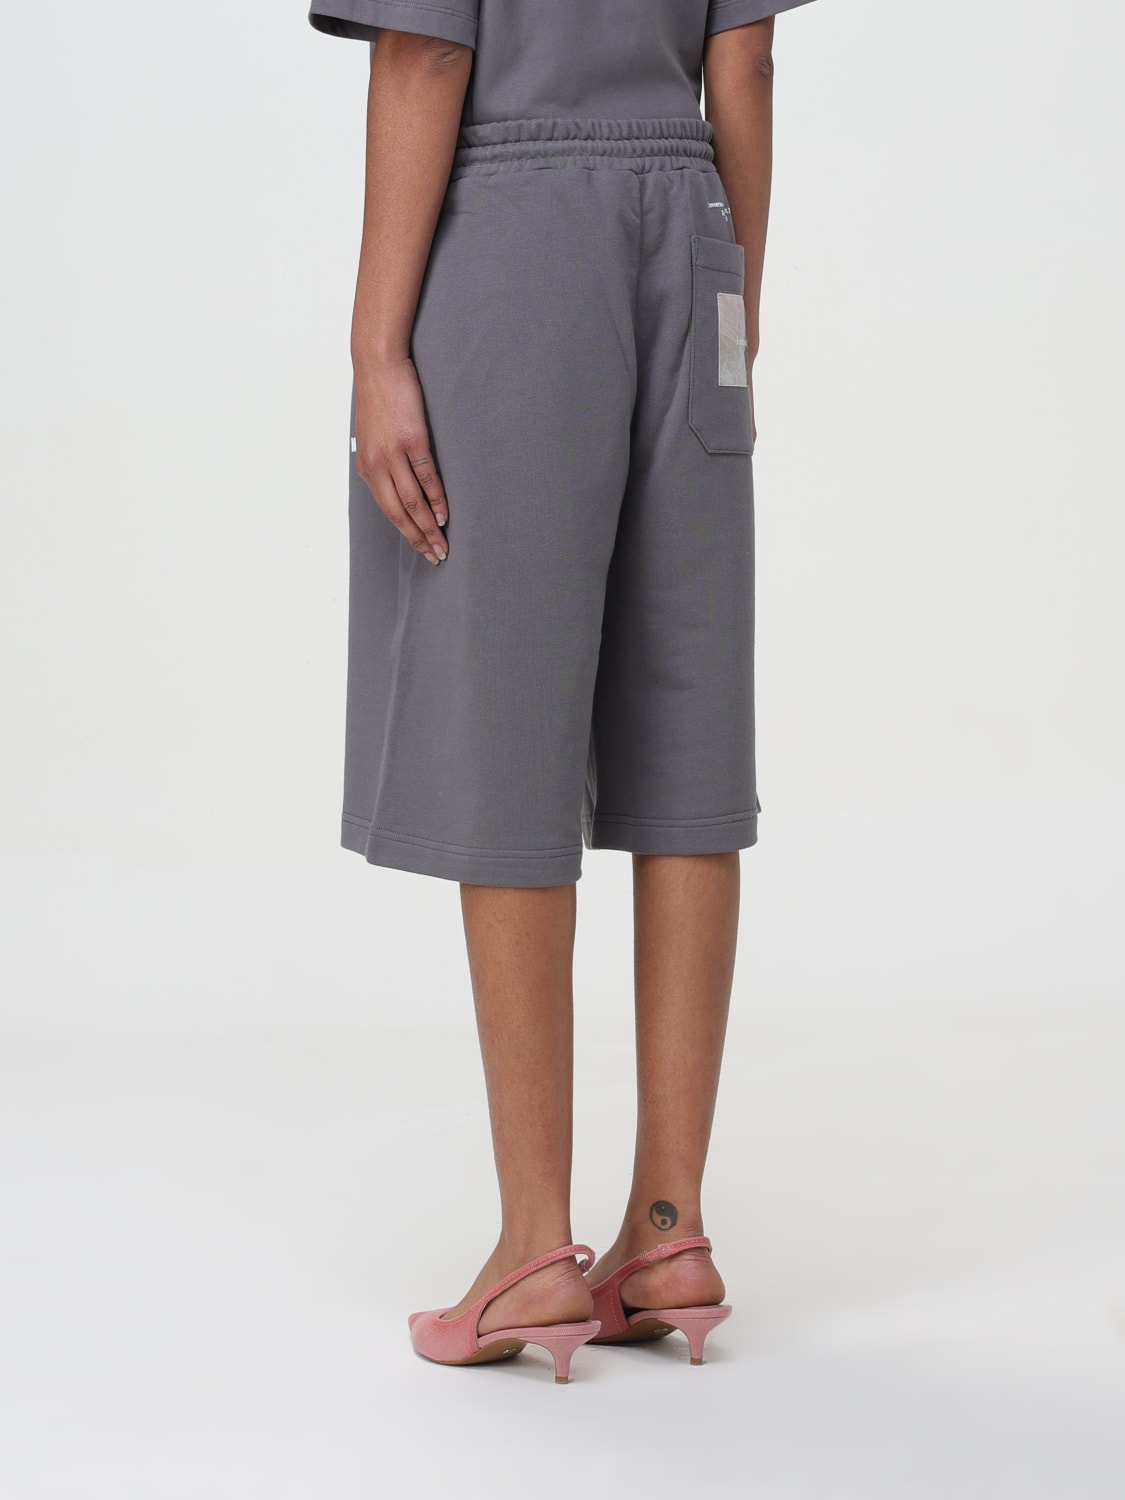 Grey Short for Women